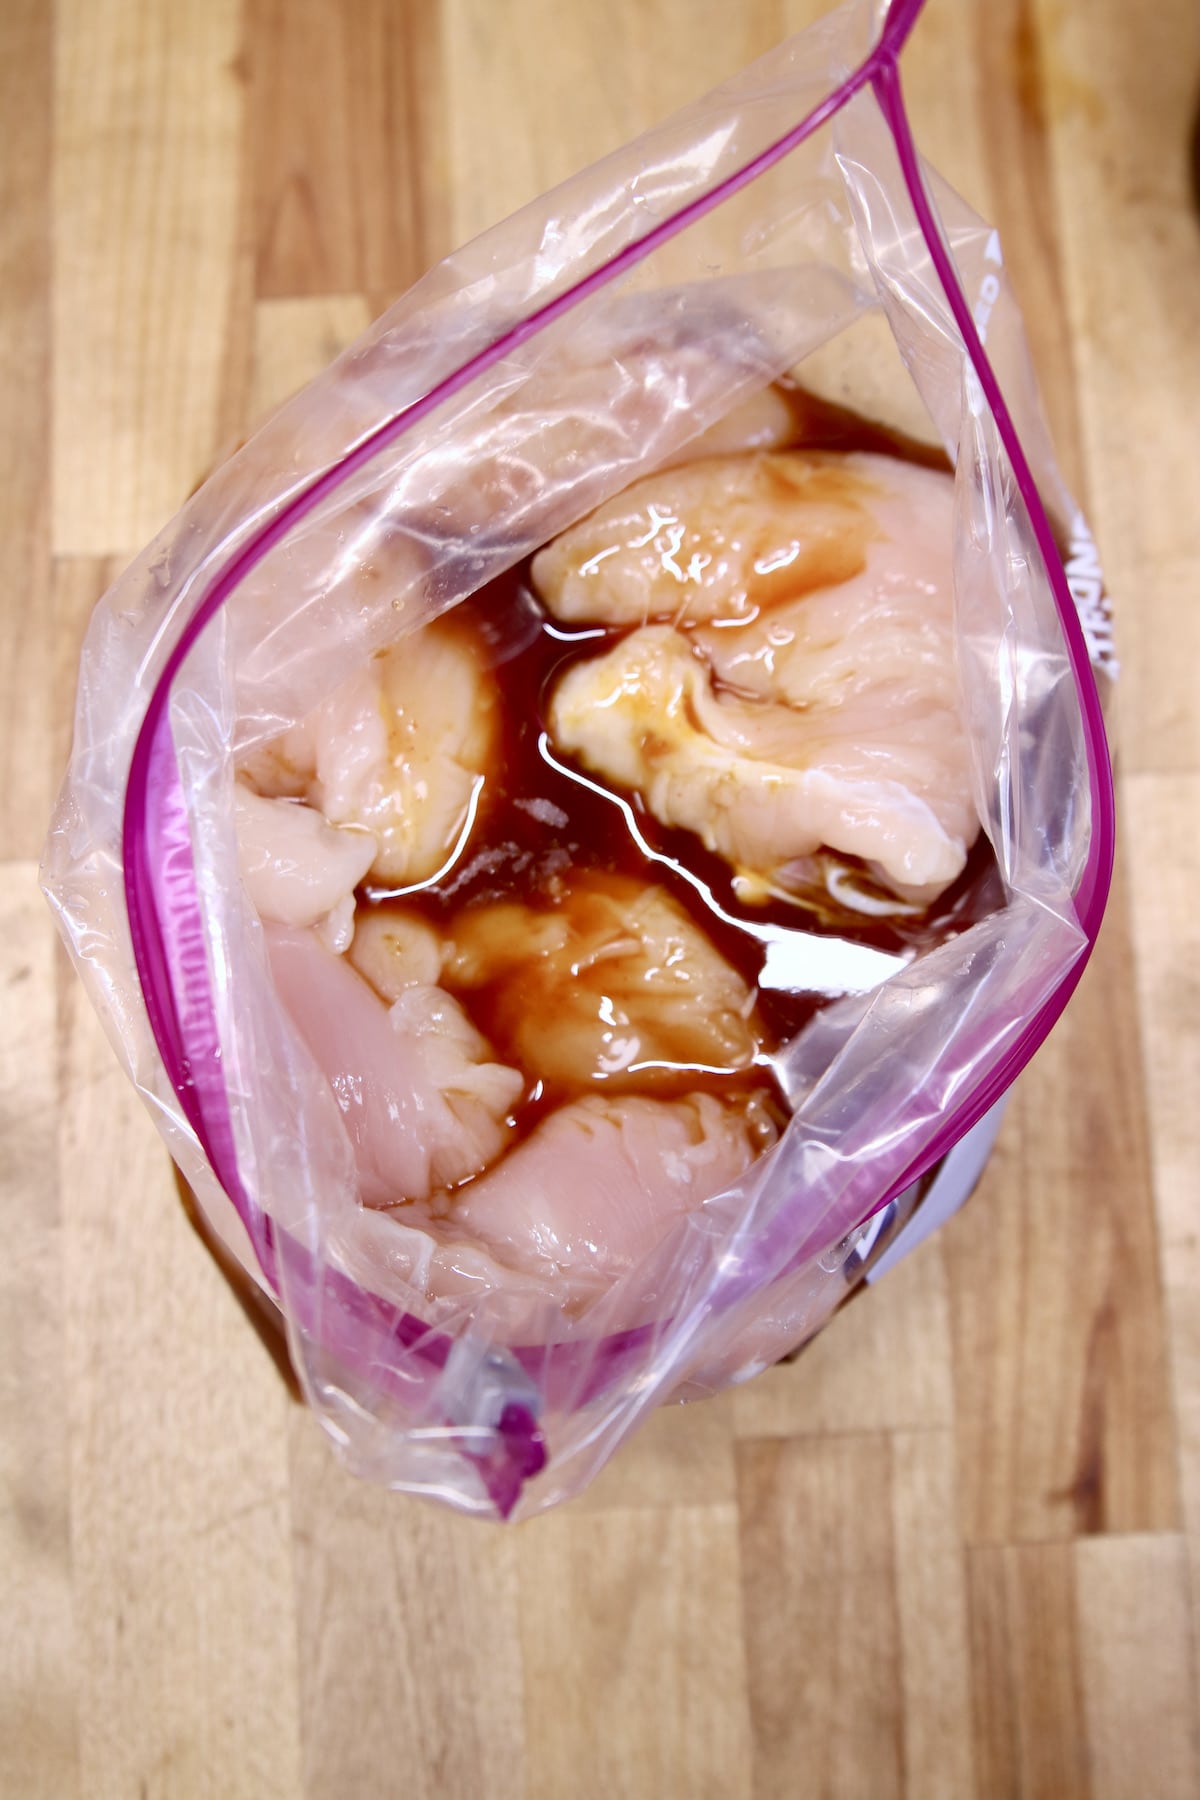 Open zip top bag with chicken tenders and marinade poured over.